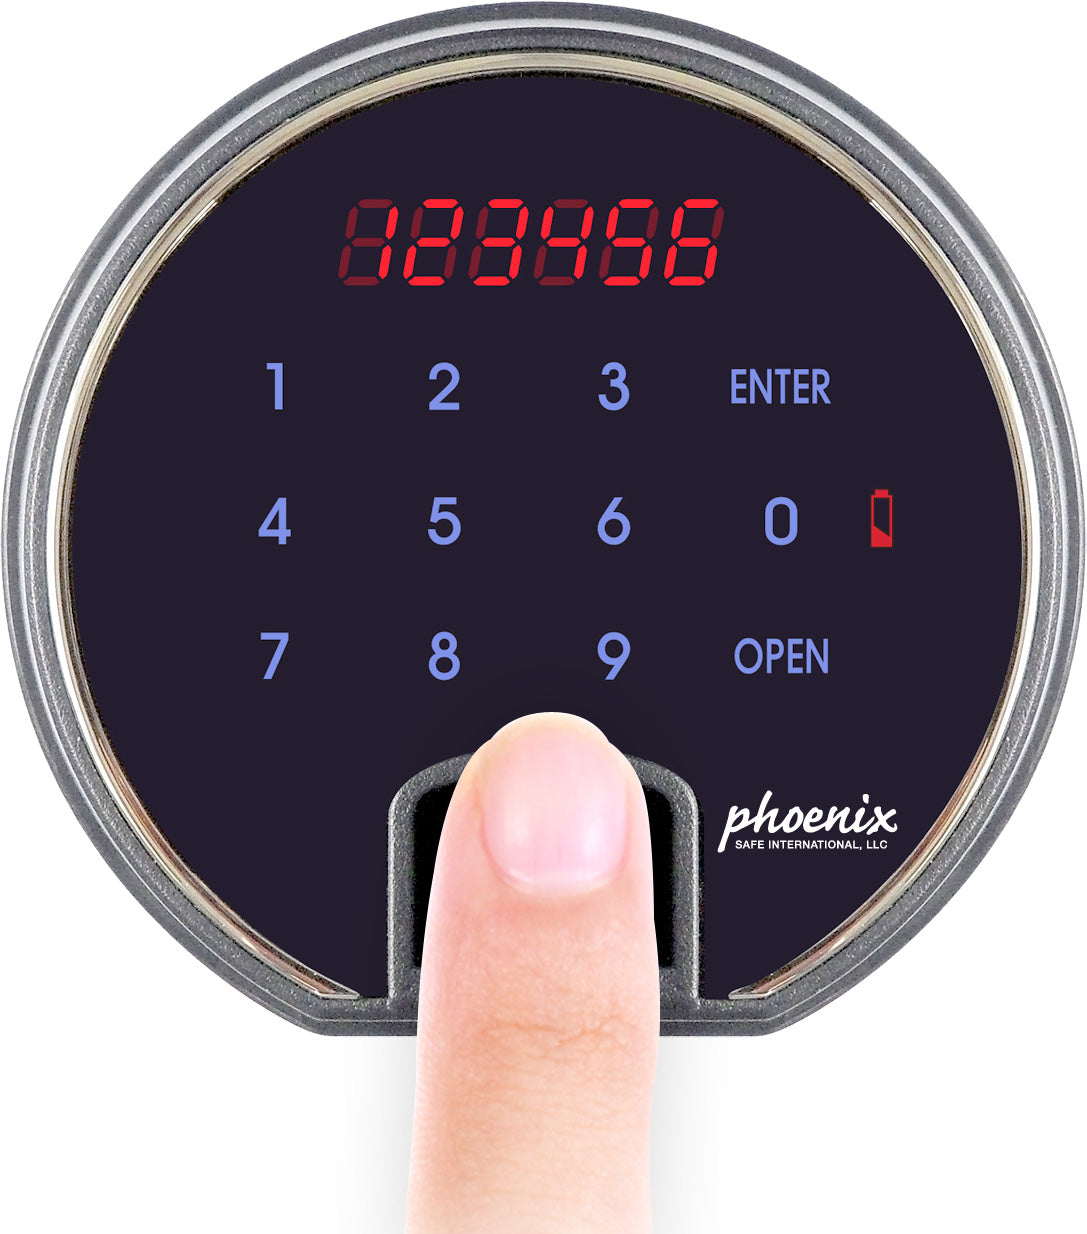 Phoenix DBAUM 800 Luxury Safe with Genuine Walnut Exterior Door Front Biometric Lock